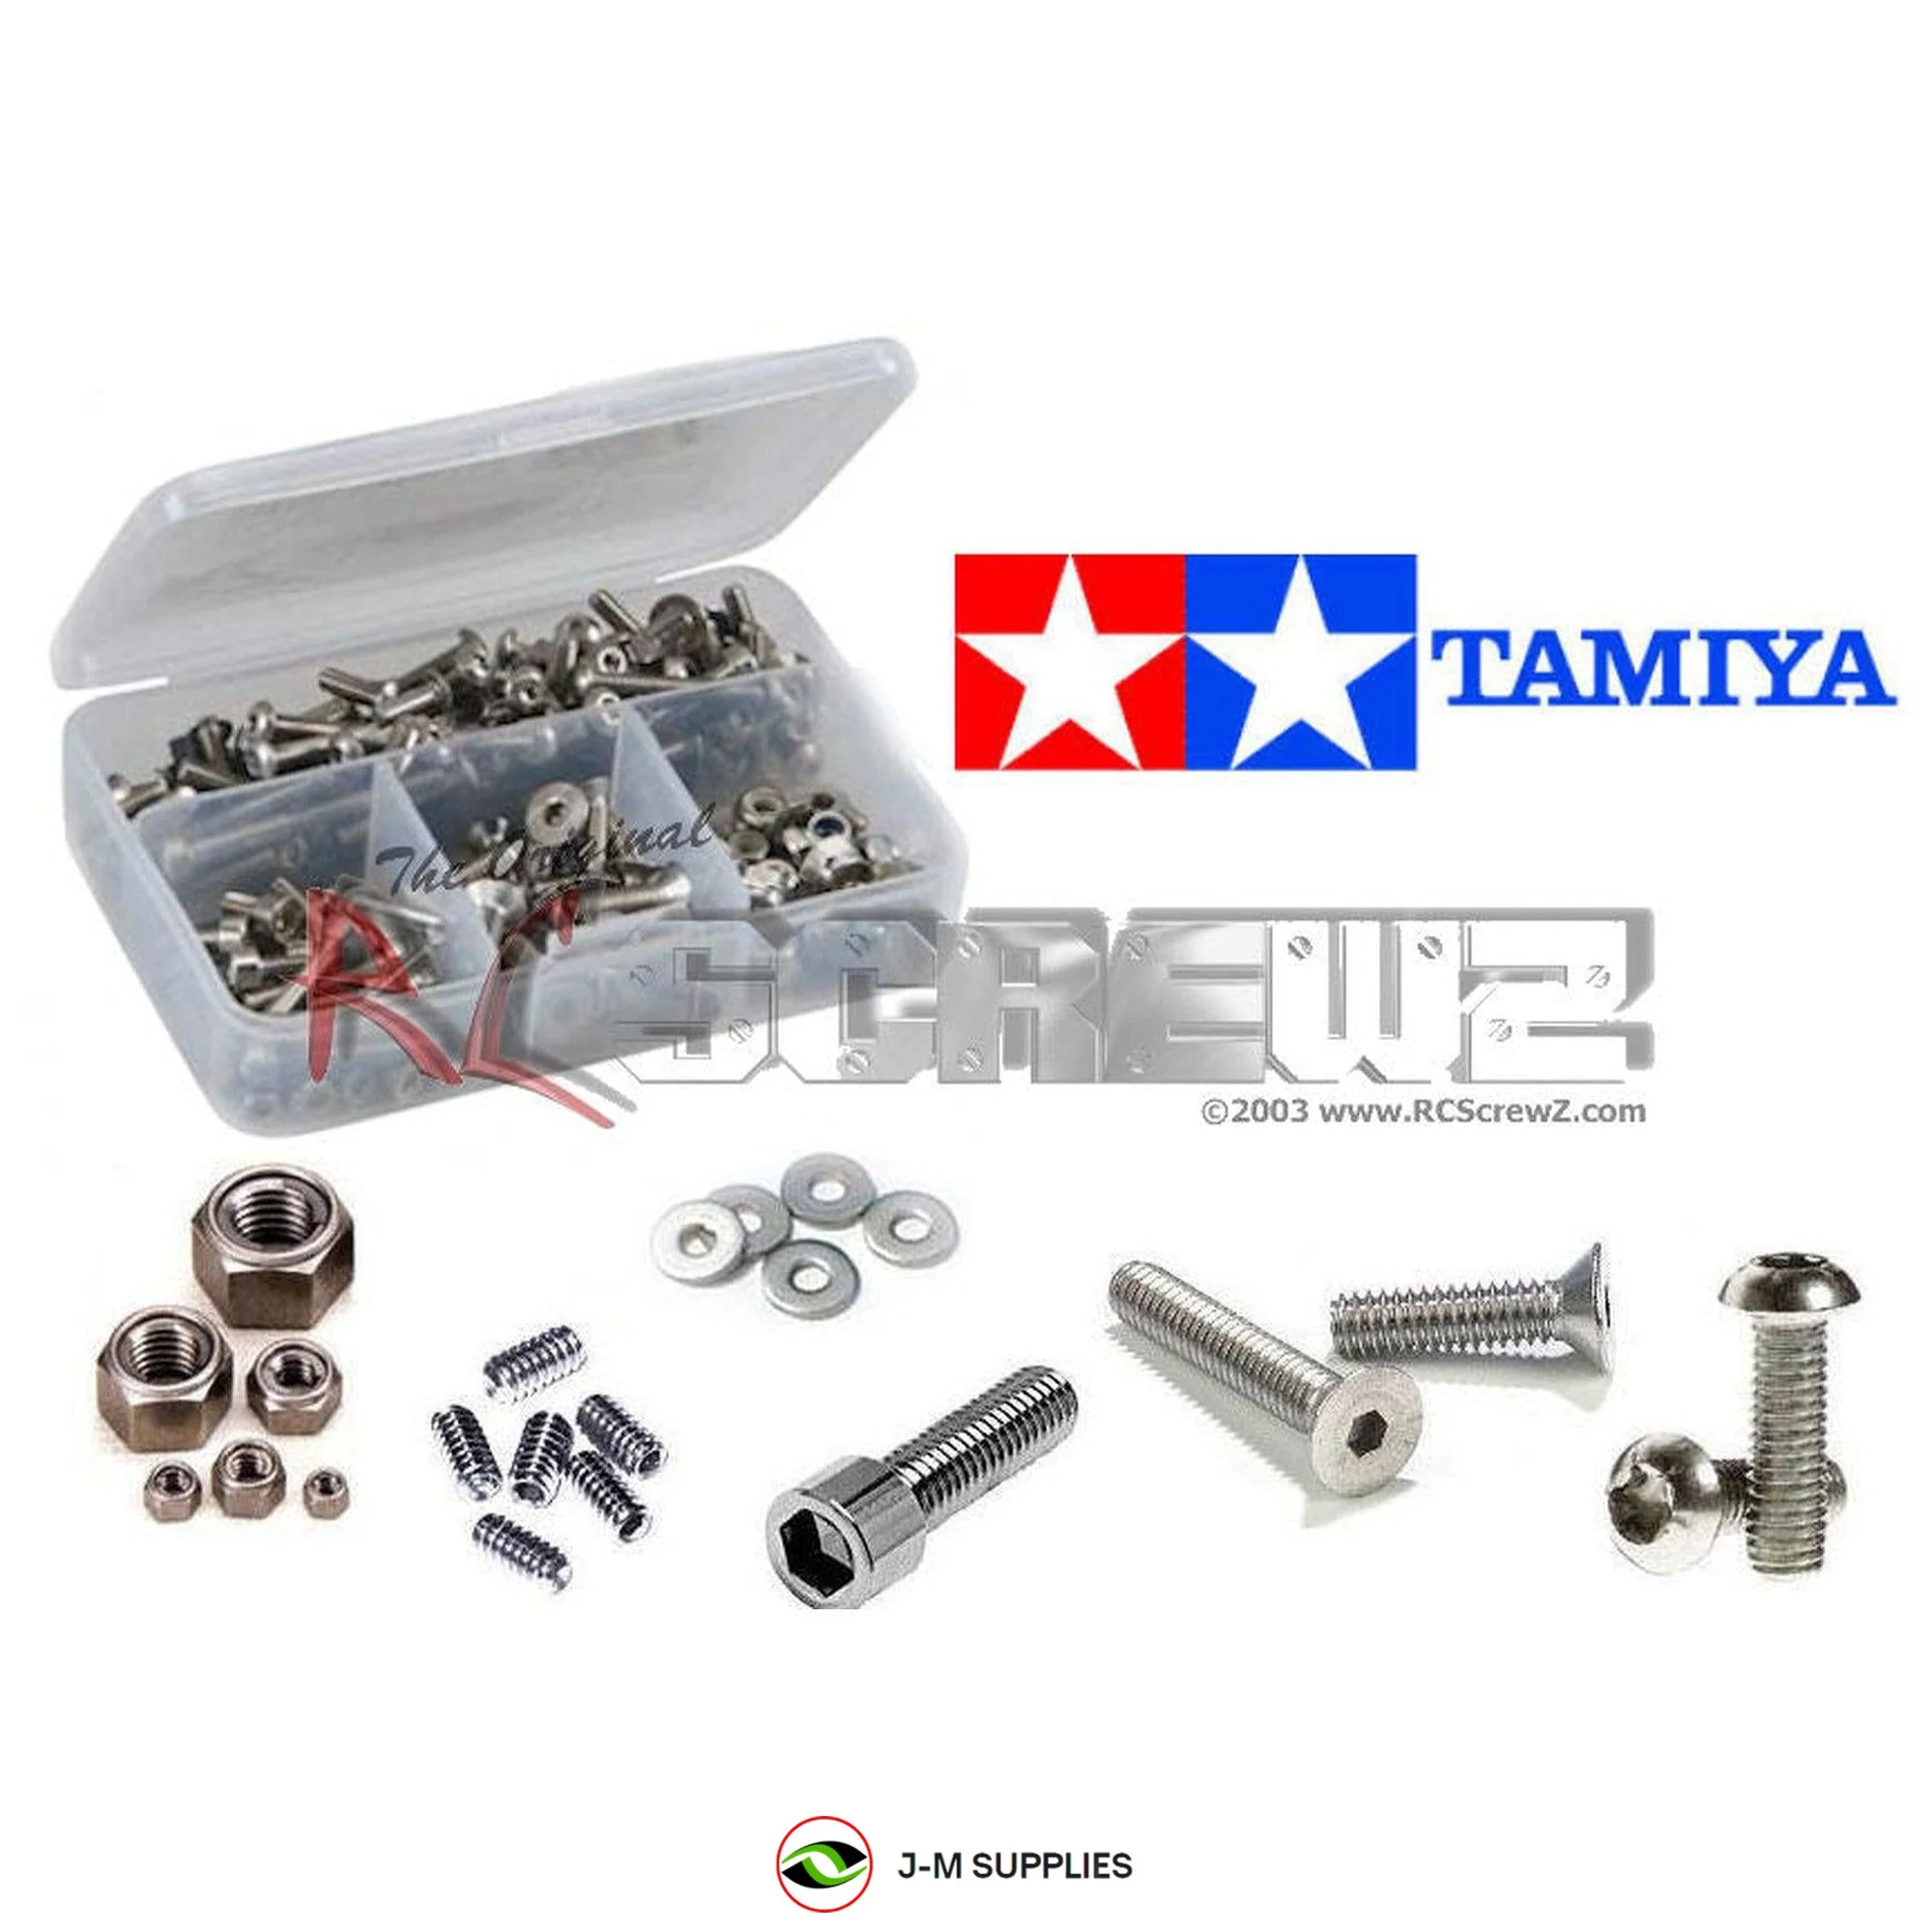 RCScrewZ Stainless Screw Kit tam066 for Tamiya 415 MSX Rheinhard Edition #49394 - Picture 1 of 12